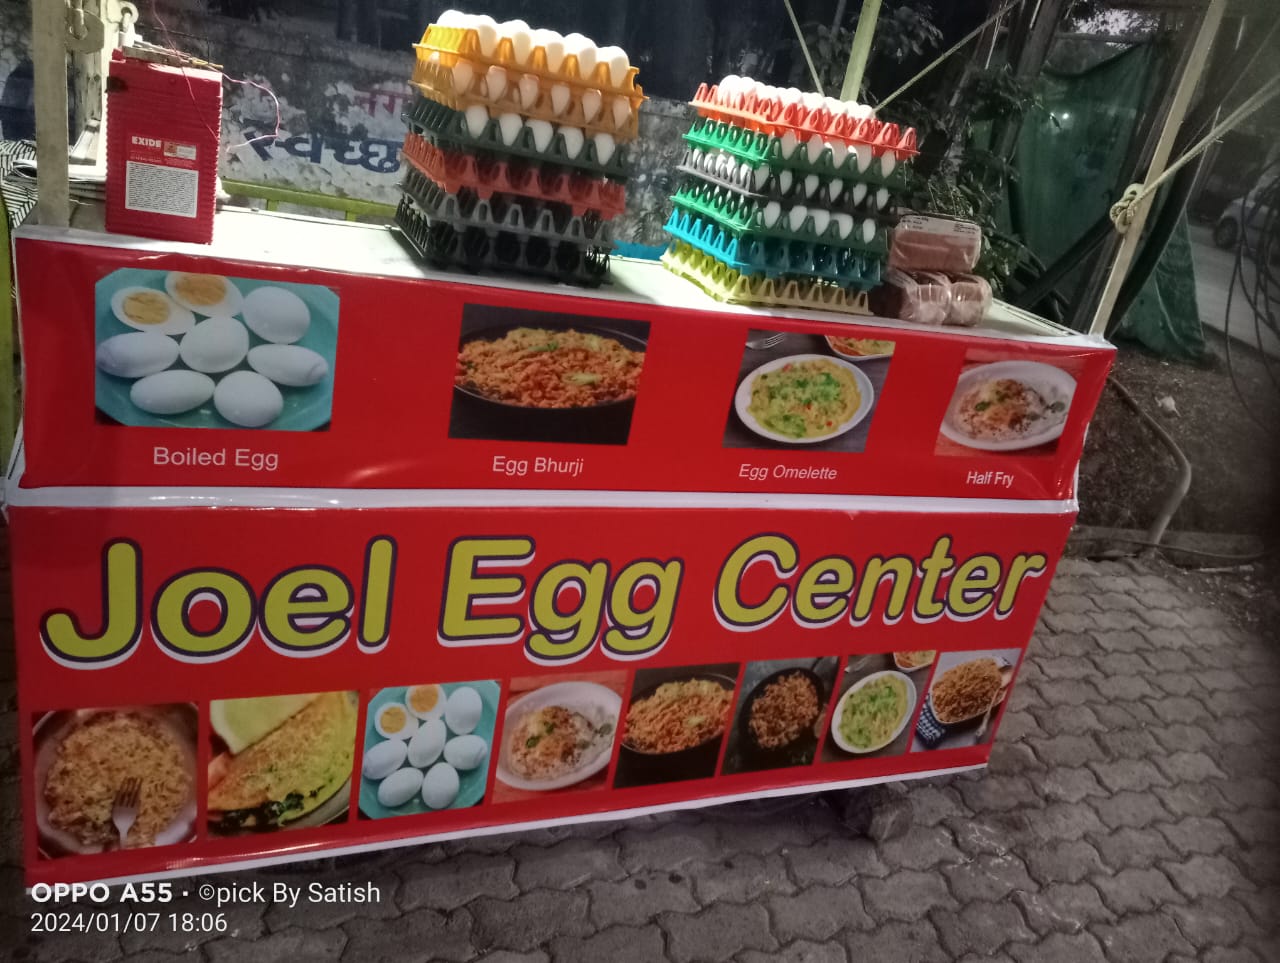 Joel egg